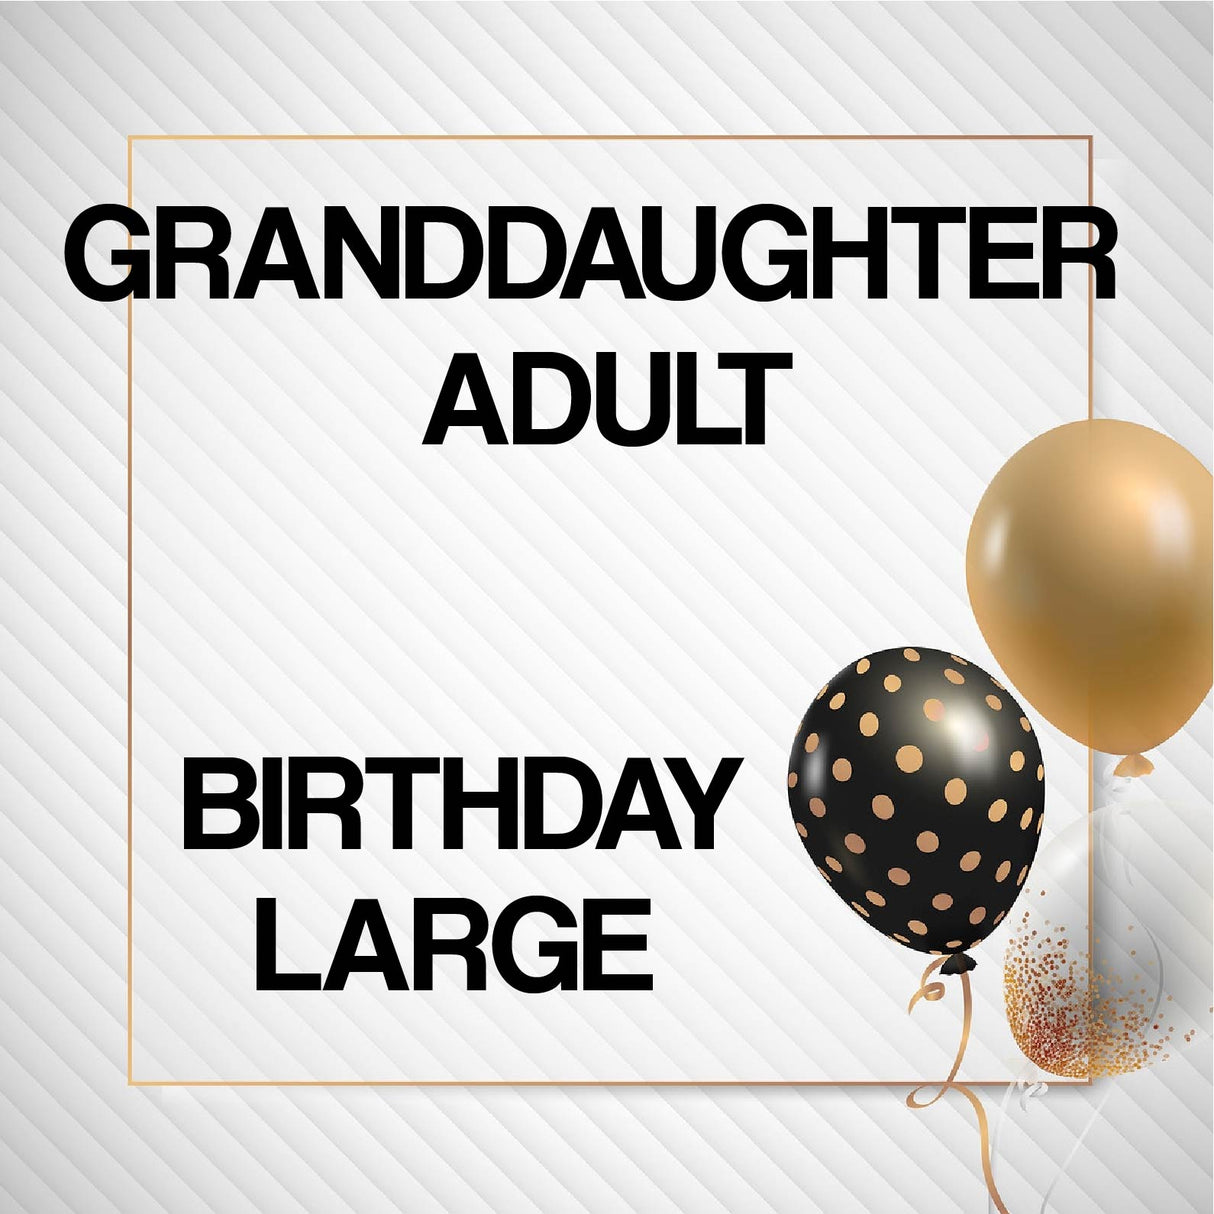 Granddaughter Adult